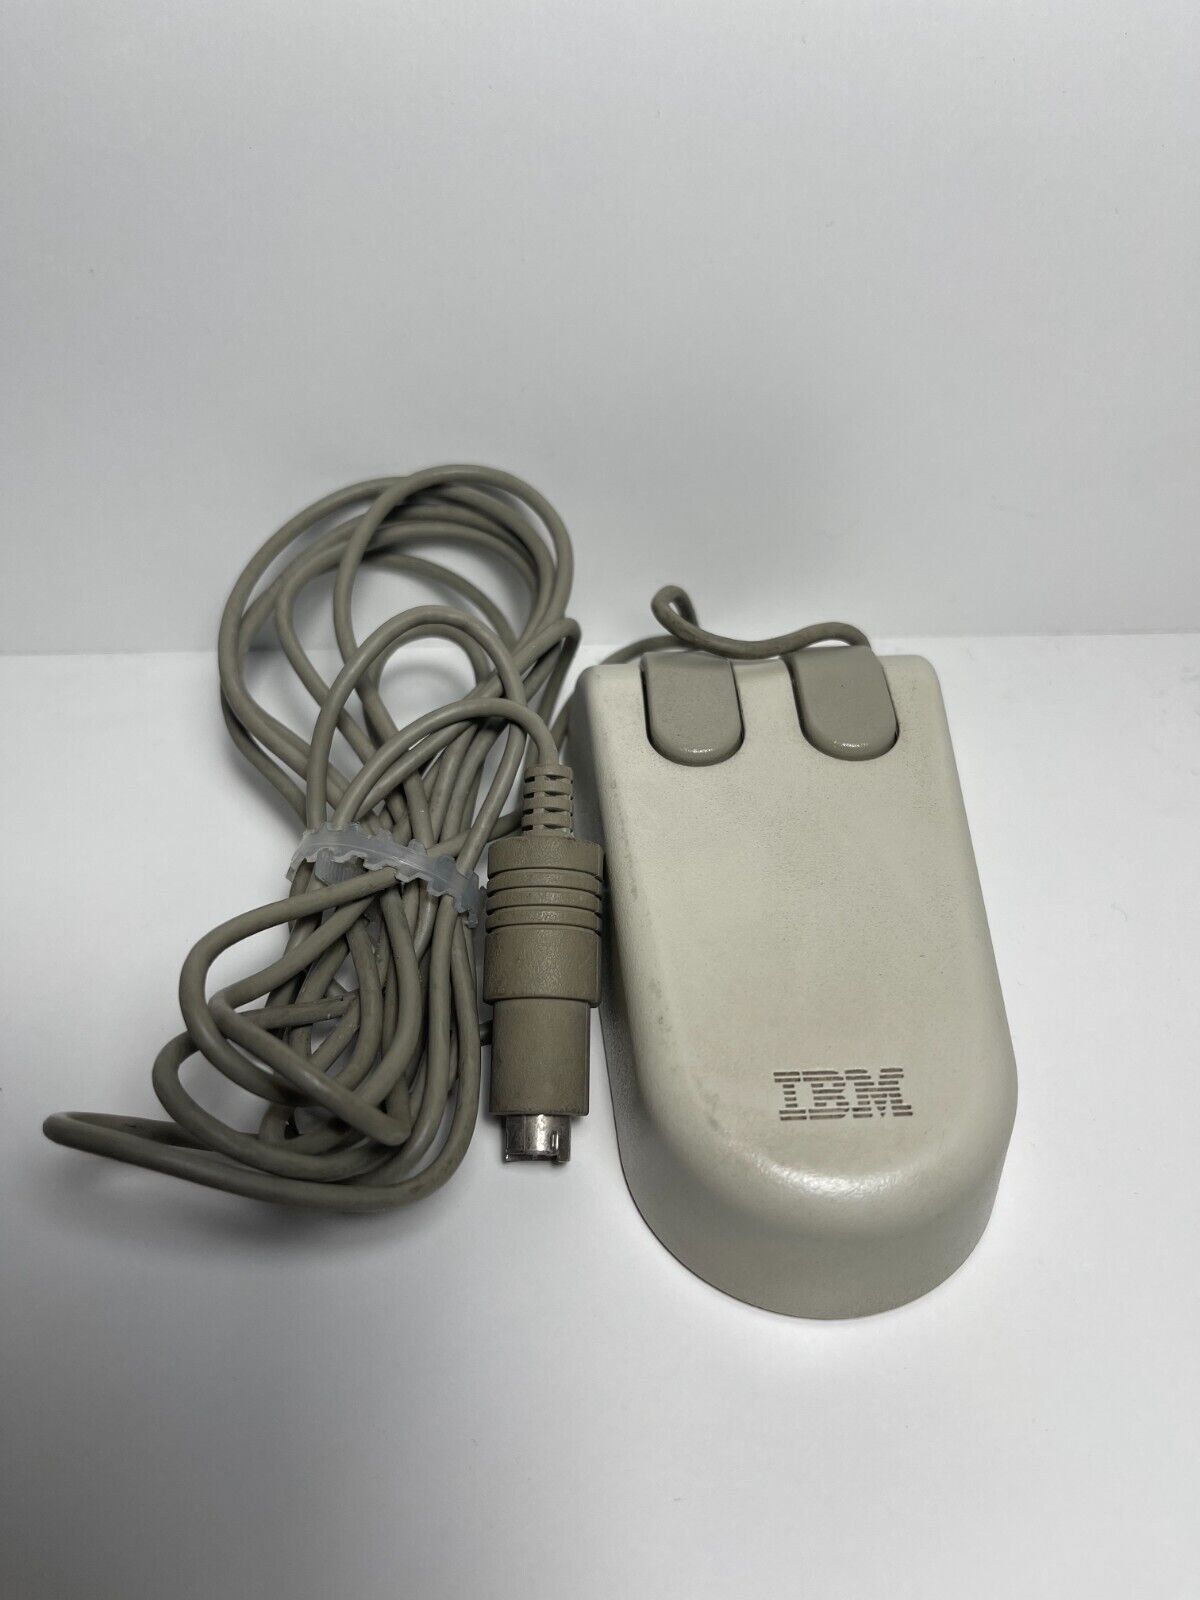 [Not Test] Rare & Vintage Original IBM Mouse PS/2 Model 6450350 Two button Japan